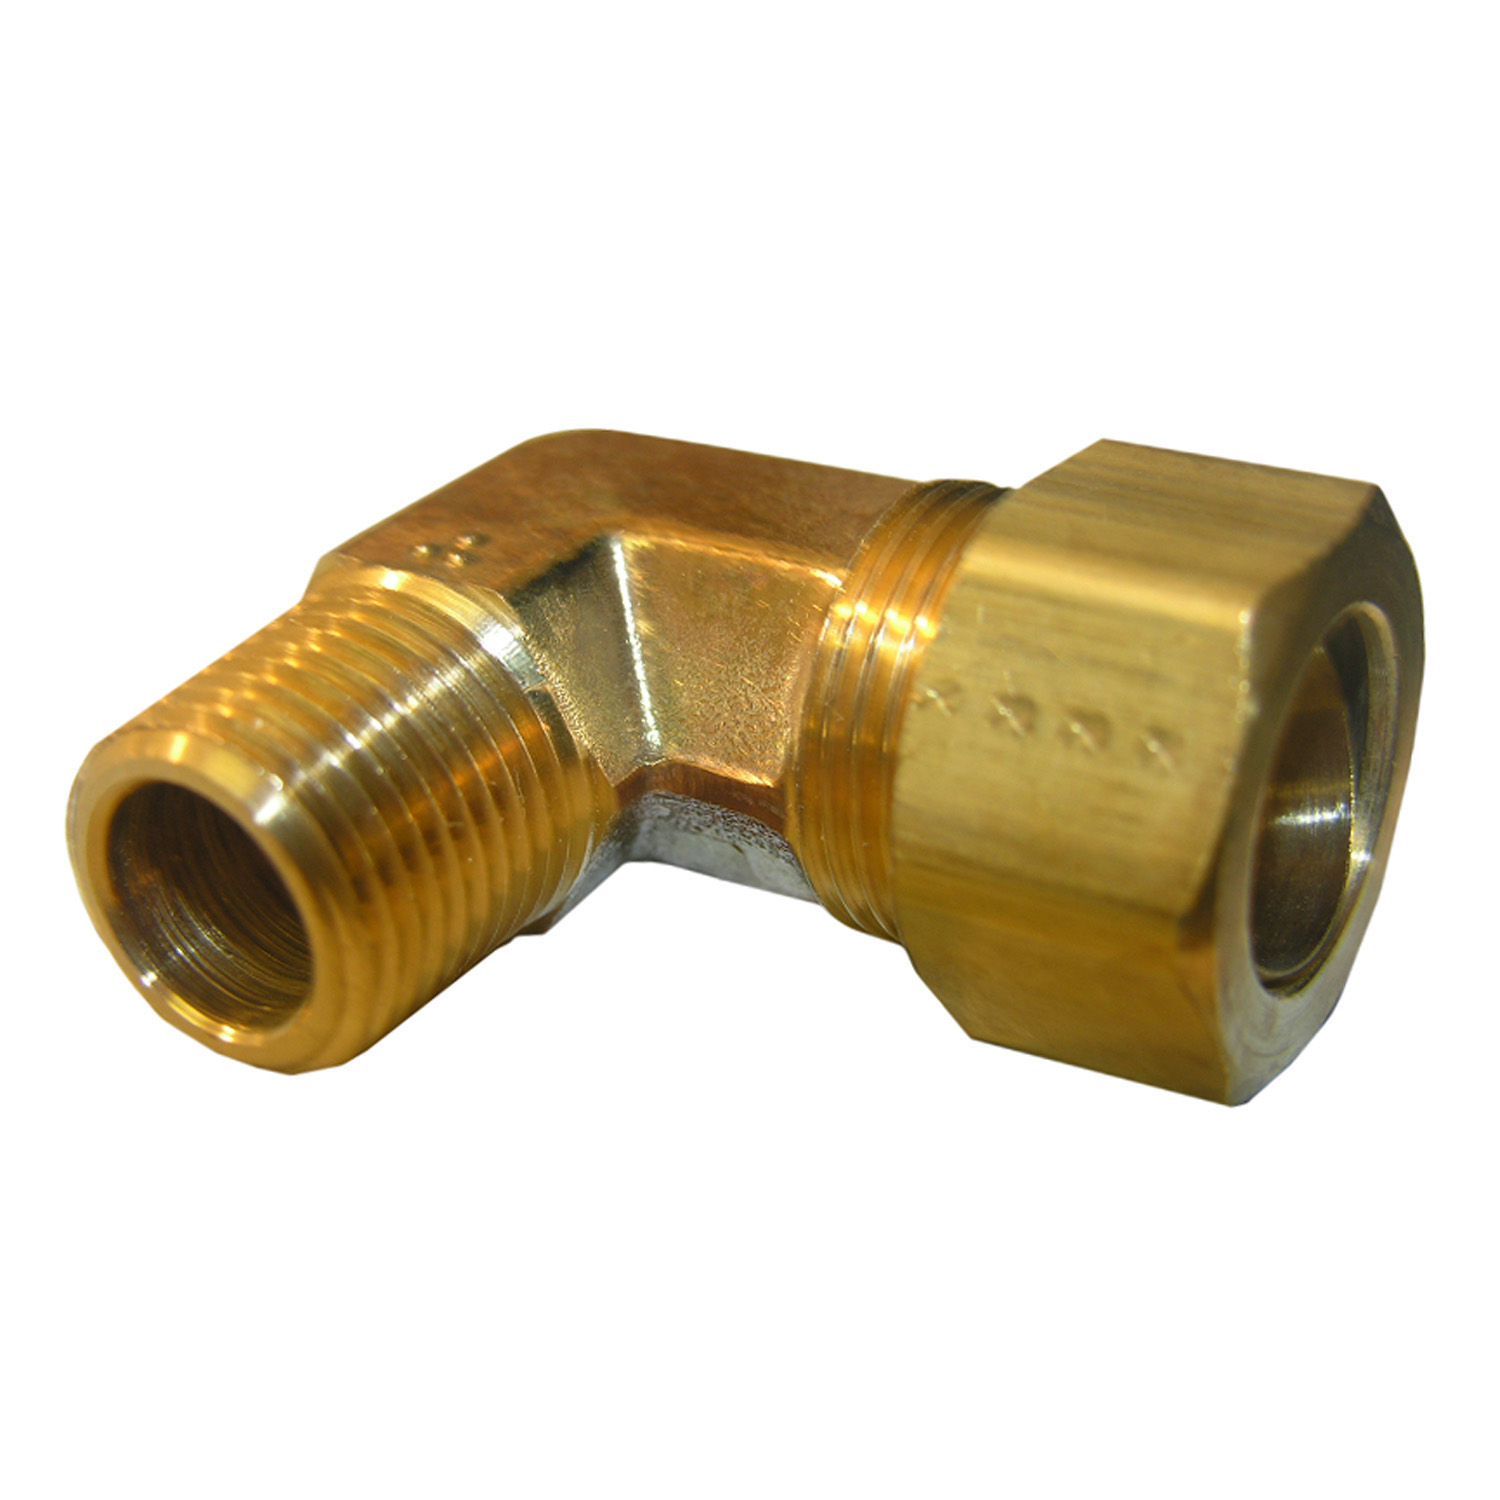 17-6955 Pipe Elbow, 5/8 x 1/2 in, Compression x MIP, 90 deg Angle, Brass, 200 psi Pressure